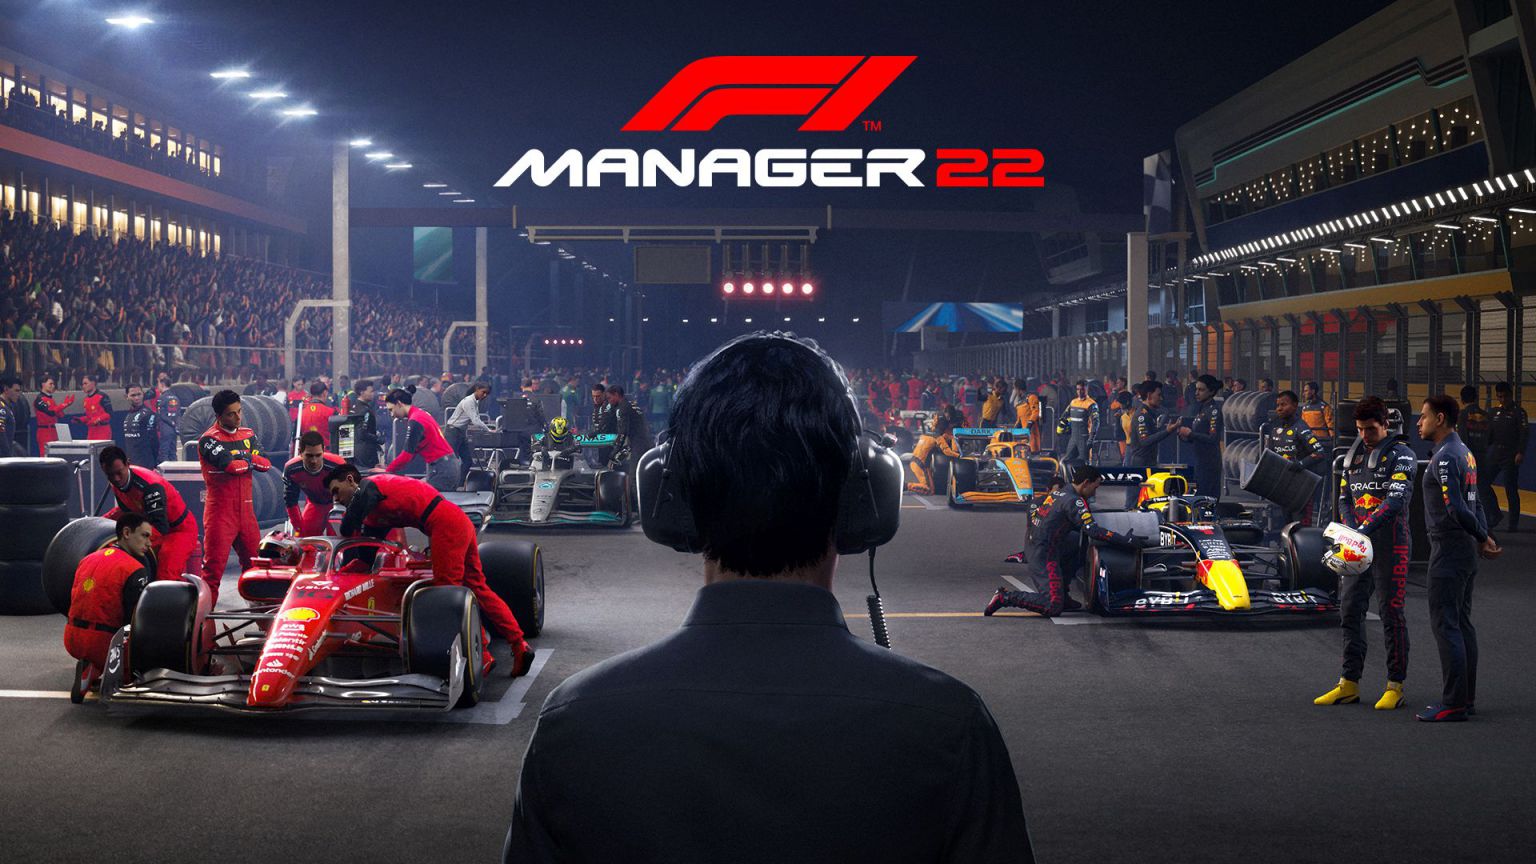 f1 manager 2022 - generacion xbox